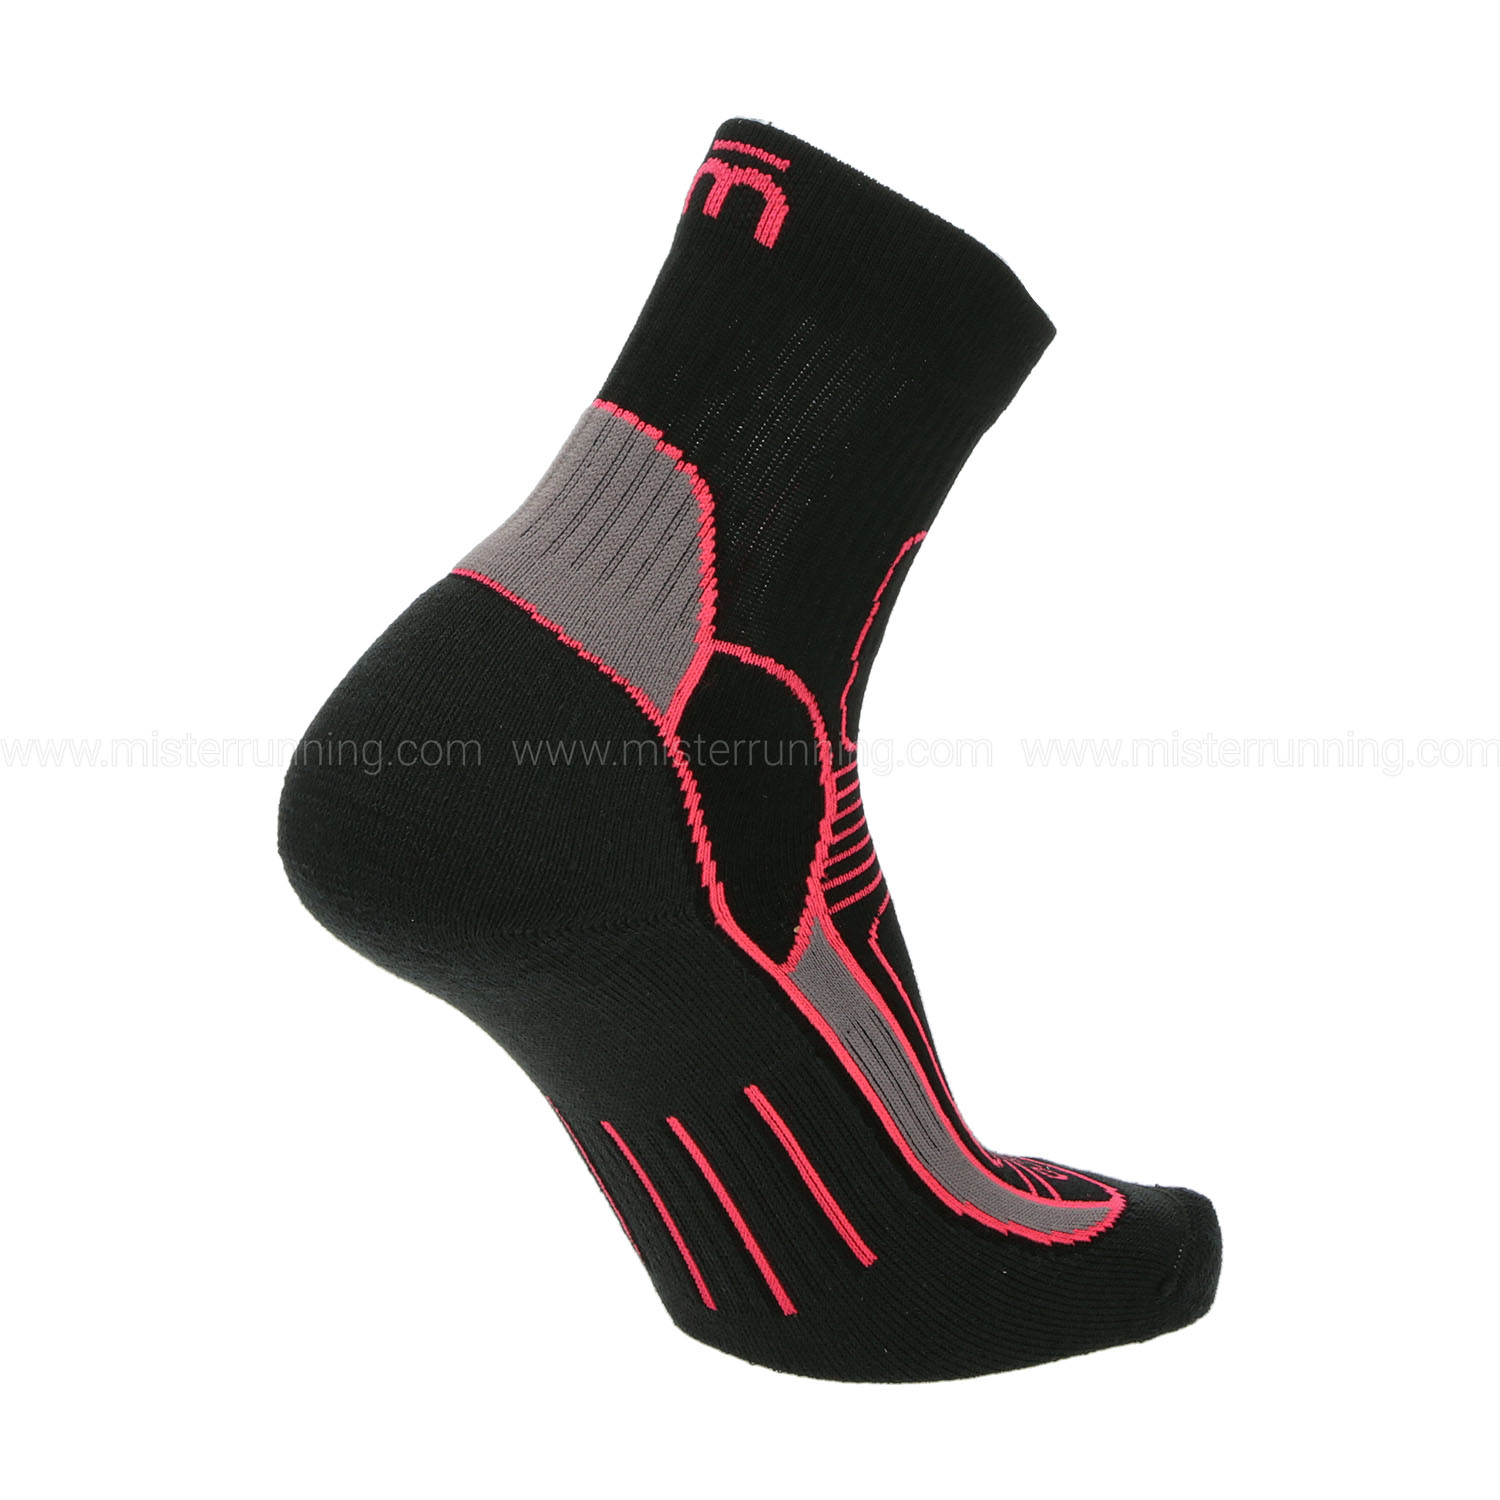 Mico Extra Dry Medium Weight Socks Woman - Nero/Pop Star